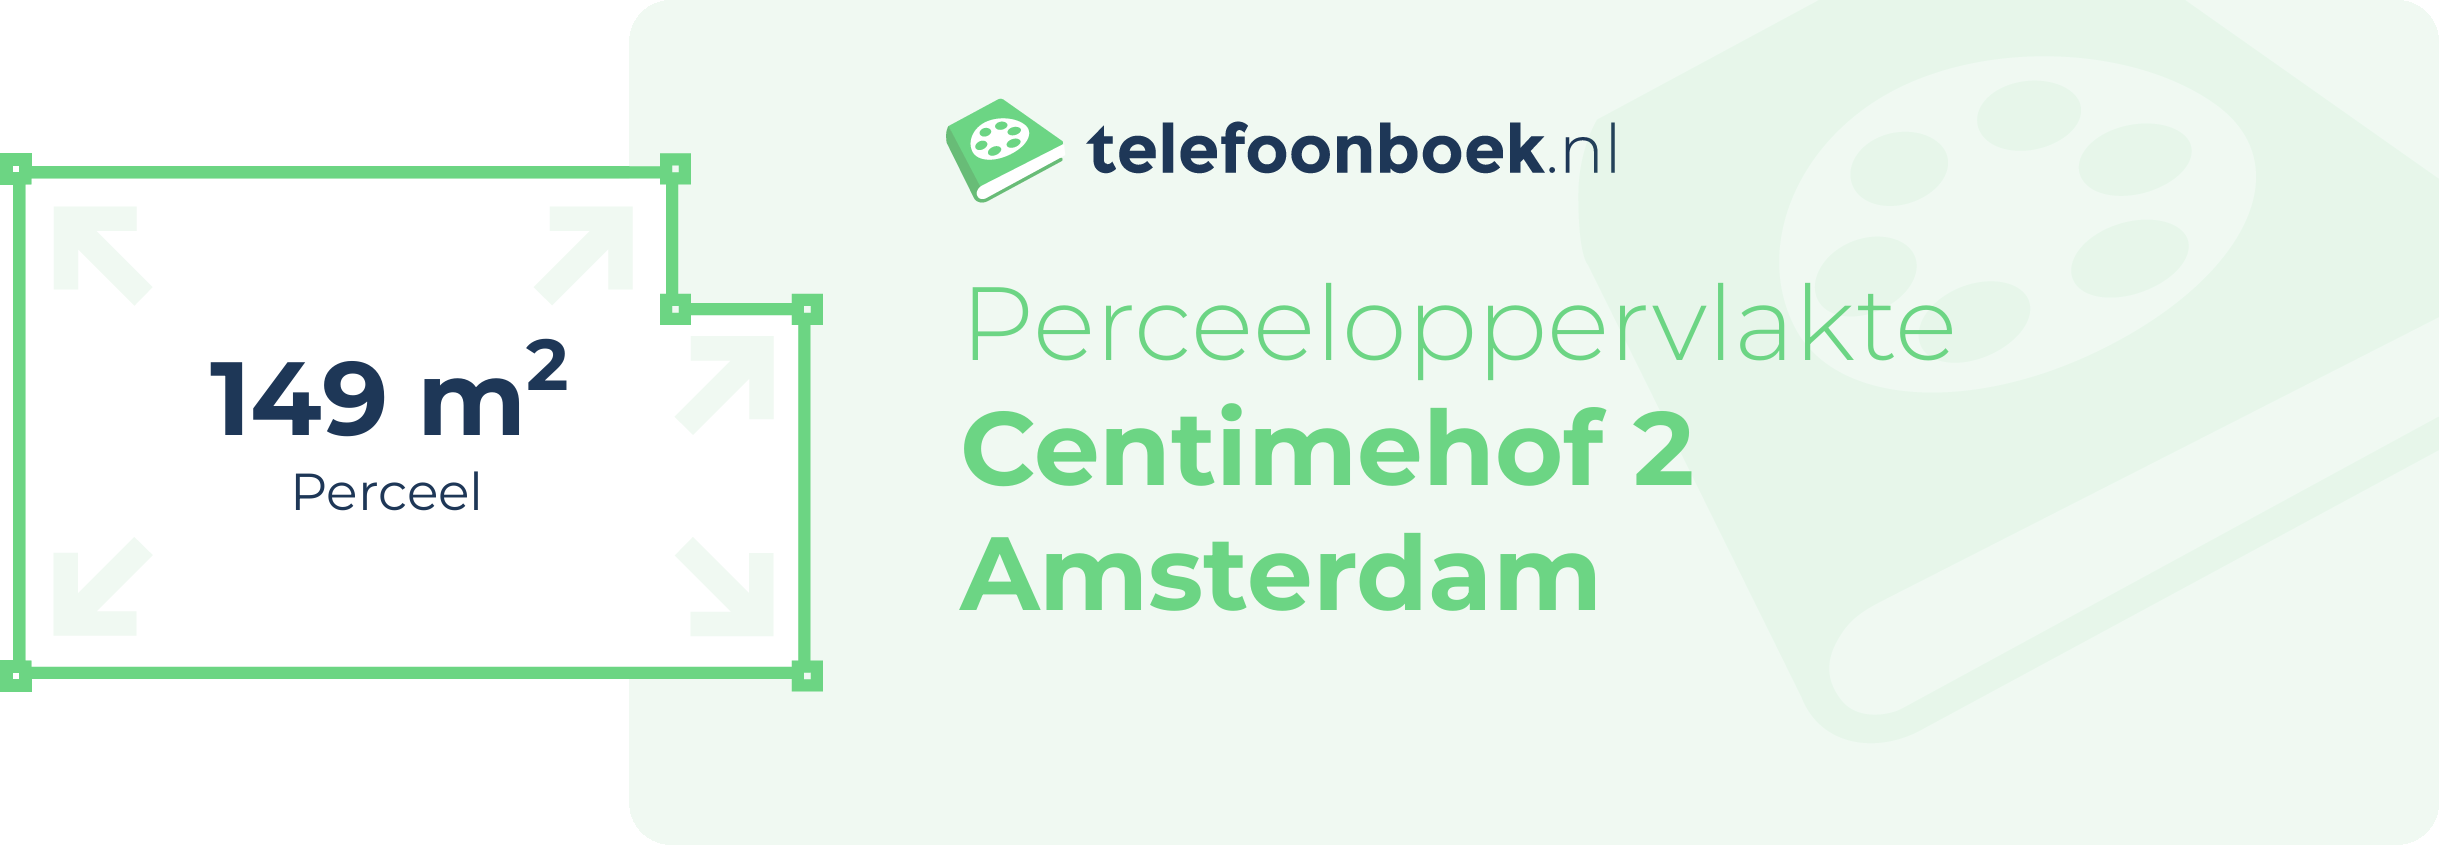 Perceeloppervlakte Centimehof 2 Amsterdam